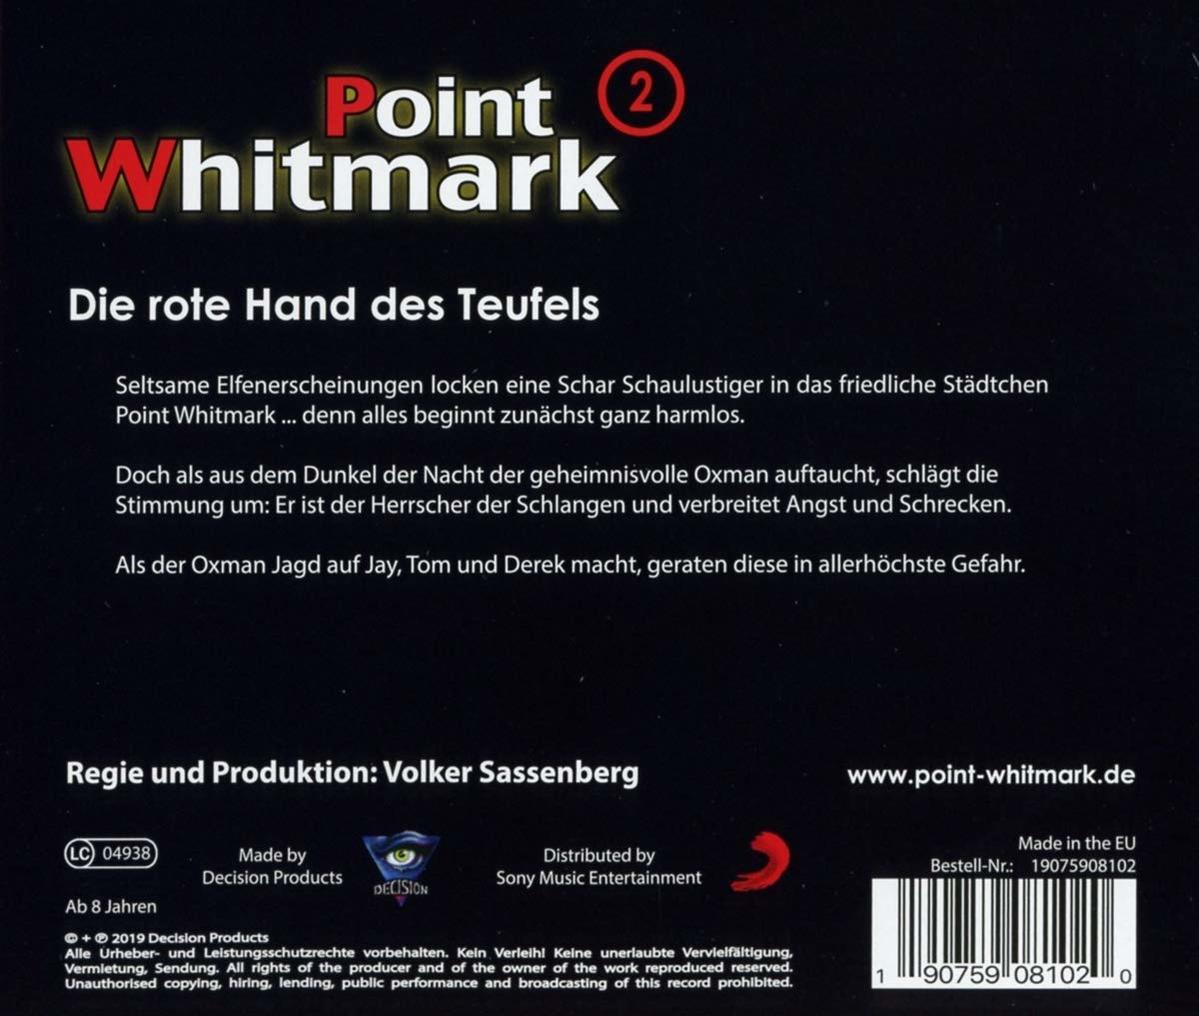 Whitmark - Point - Hand rote (CD) 02/Die Teufels des